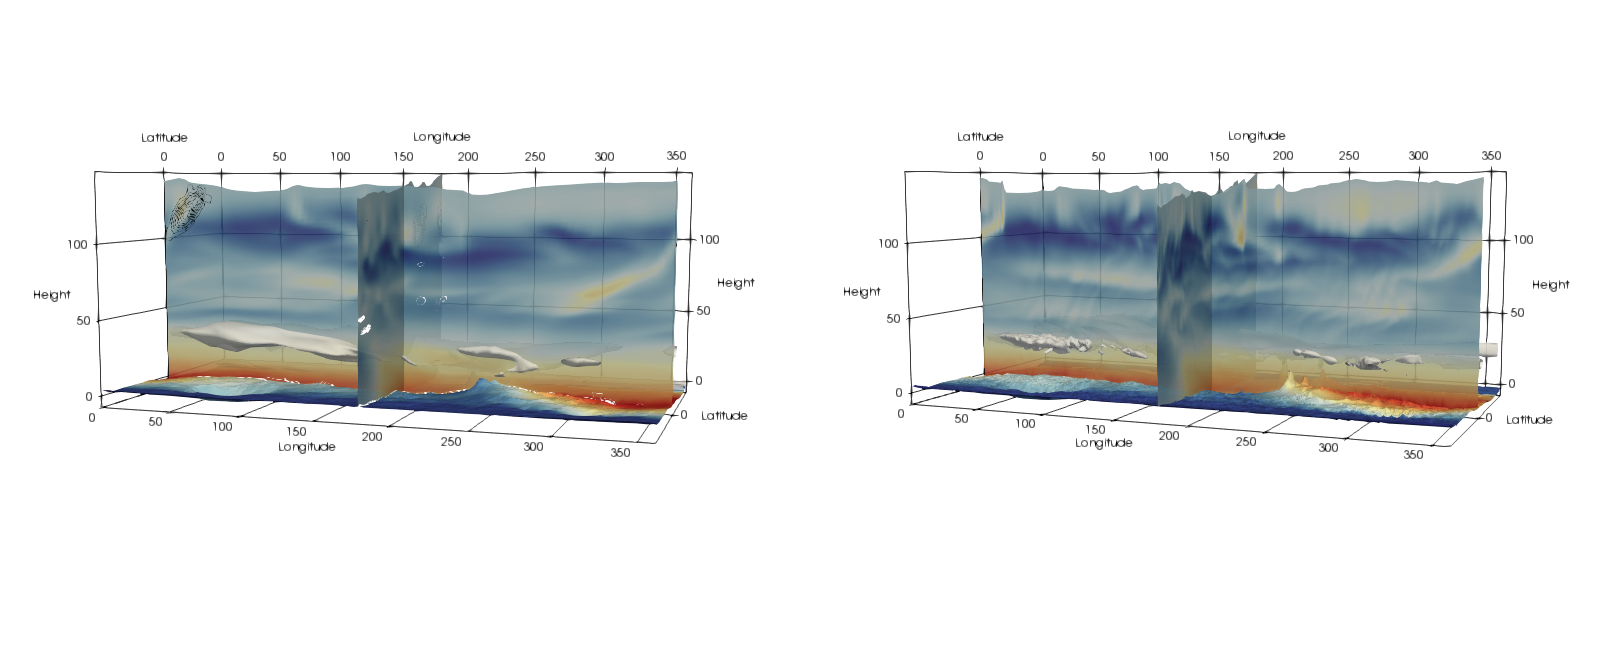 GEM-Mars model simulations at different resolutions